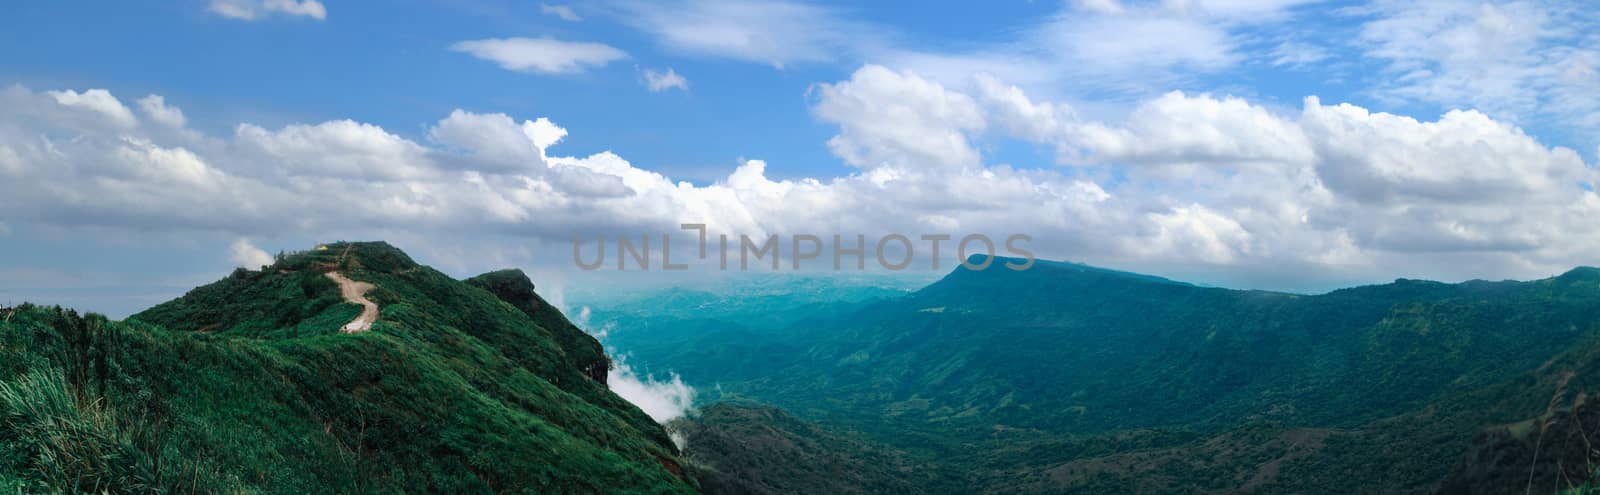 Panorama views valley mountain and sky rainy season by sompongtom